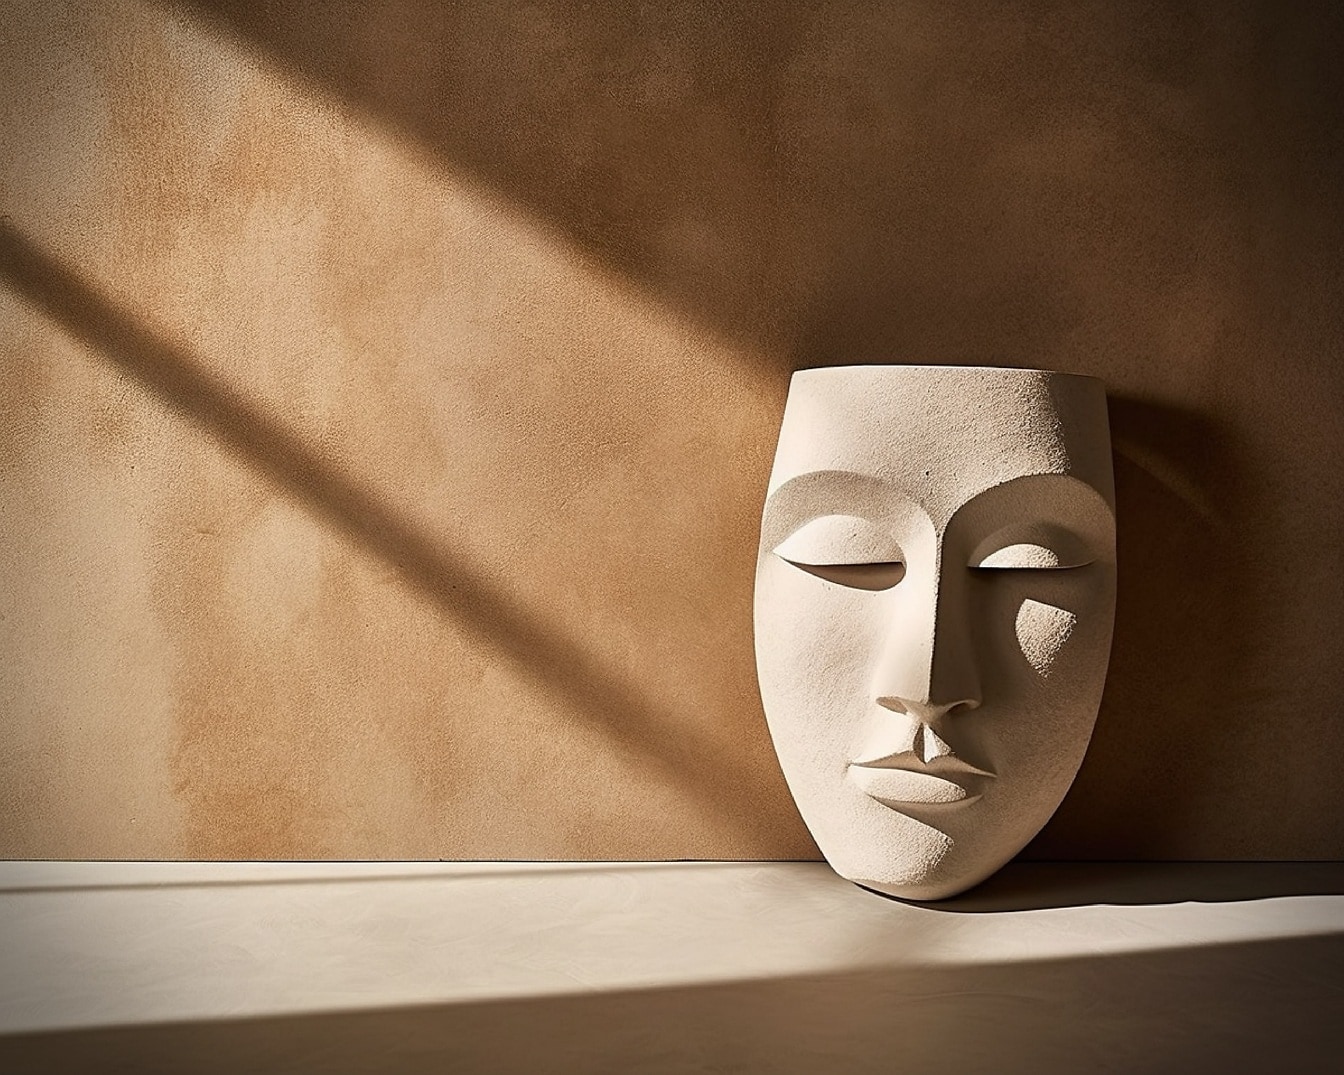 Maschera in terracotta beige in ombra da parete marrone chiaro